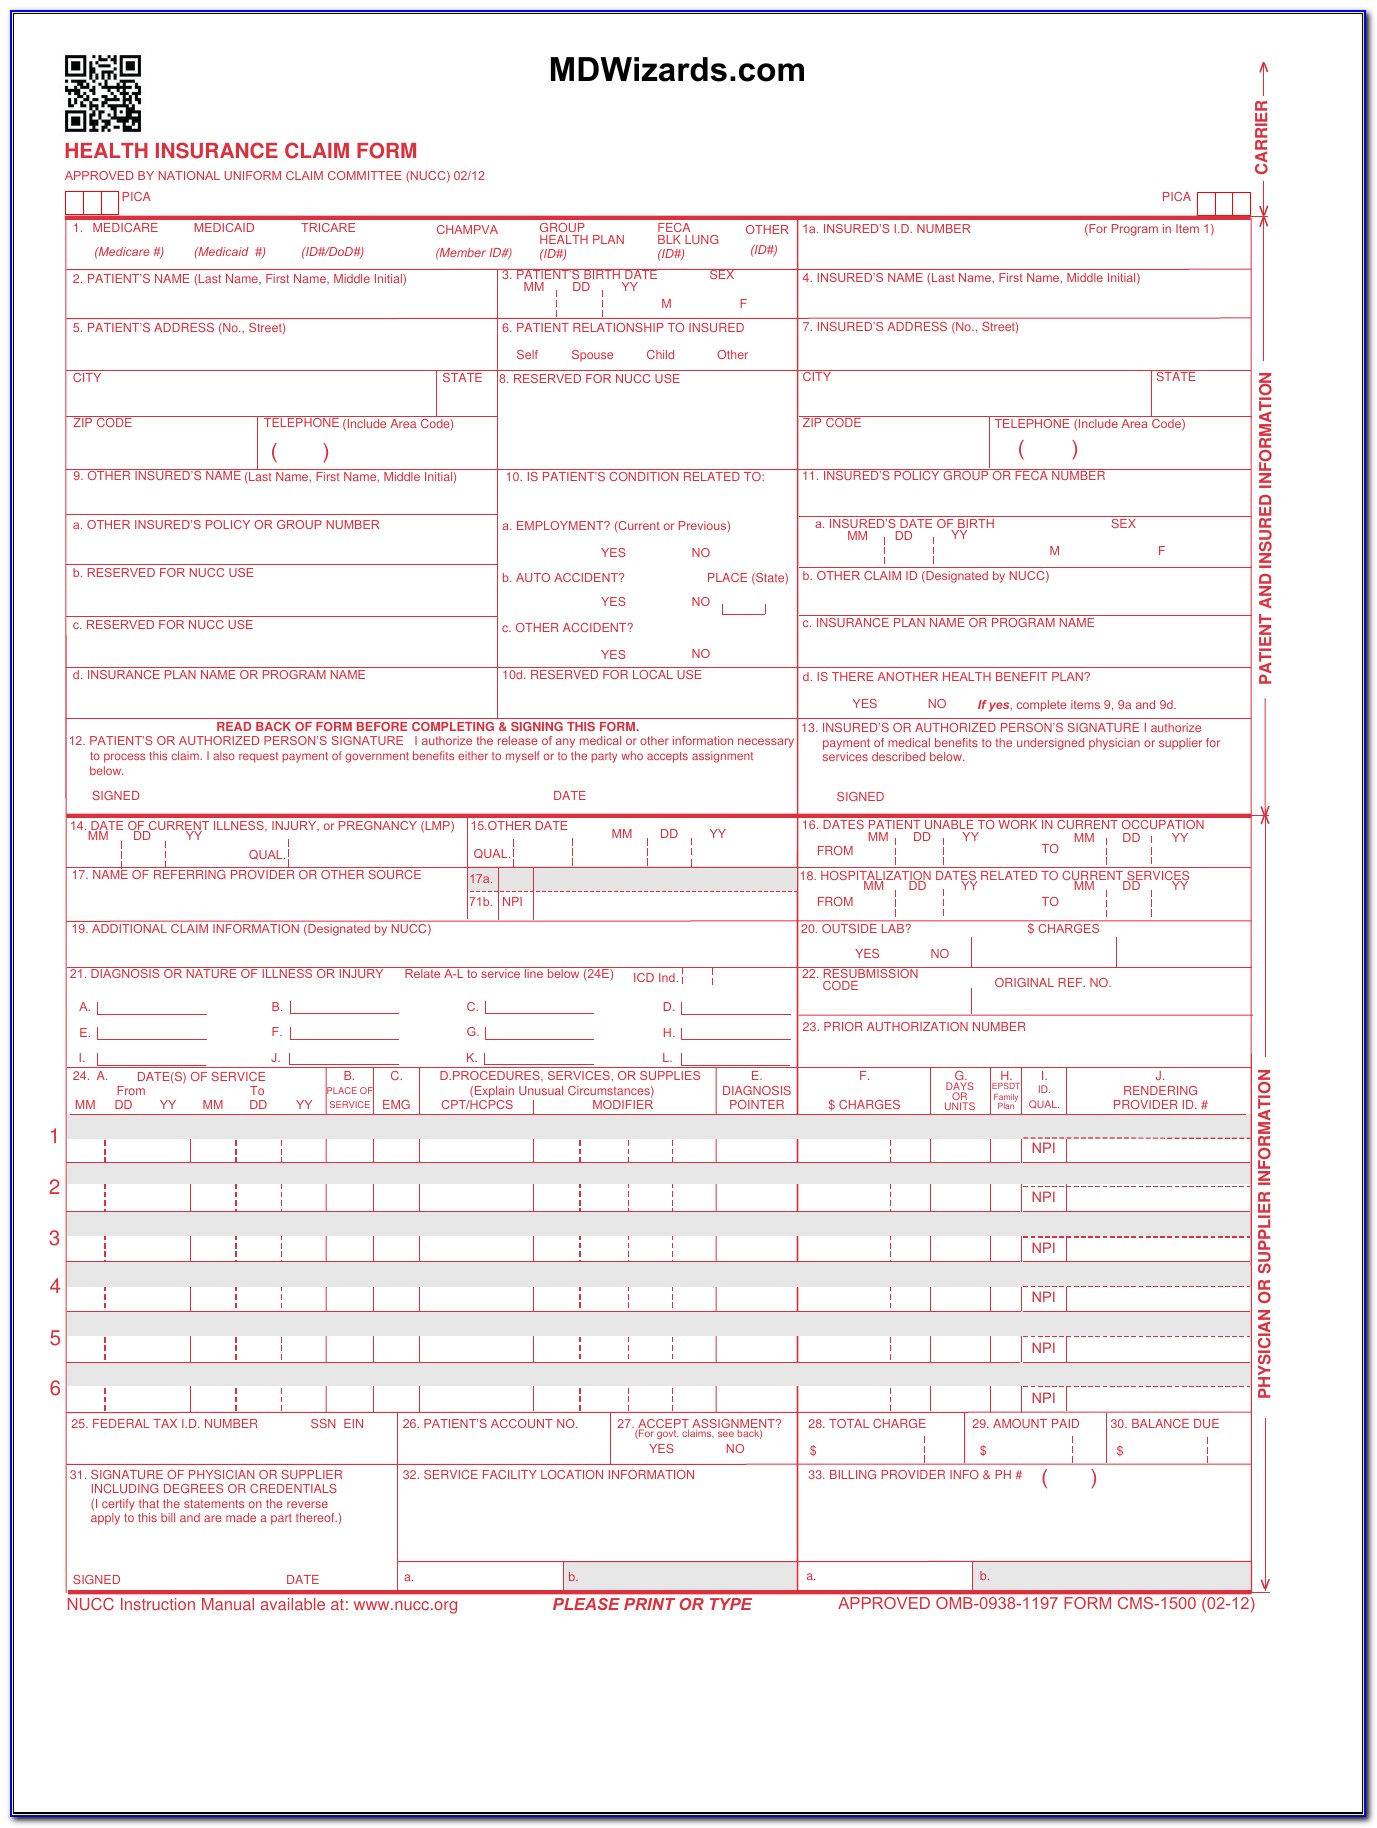 Cms 1500 Medicare Attachment Formment Application Form